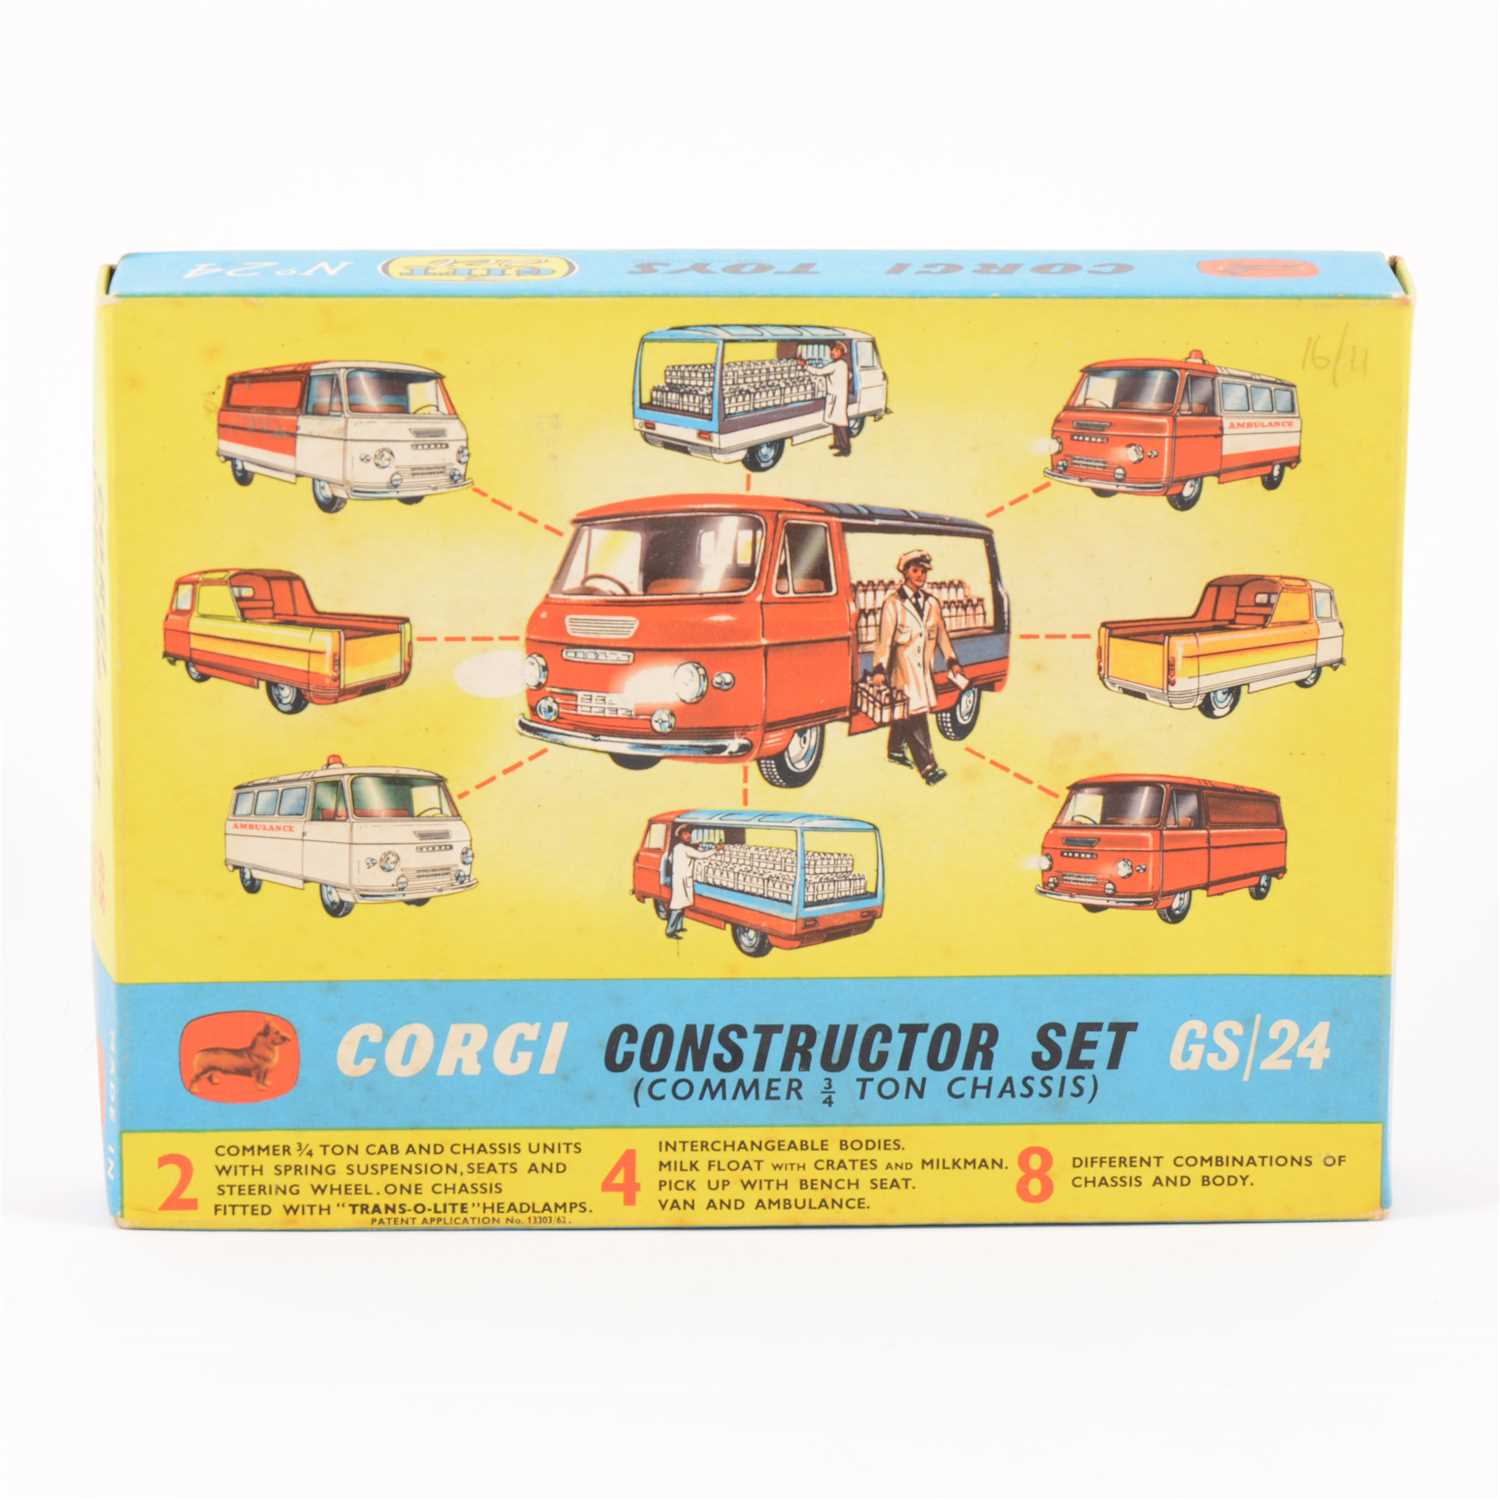 Lot 174 - Corgi Toys; Gift set no.24, Constructor Set Commer 3/4 ton chassis